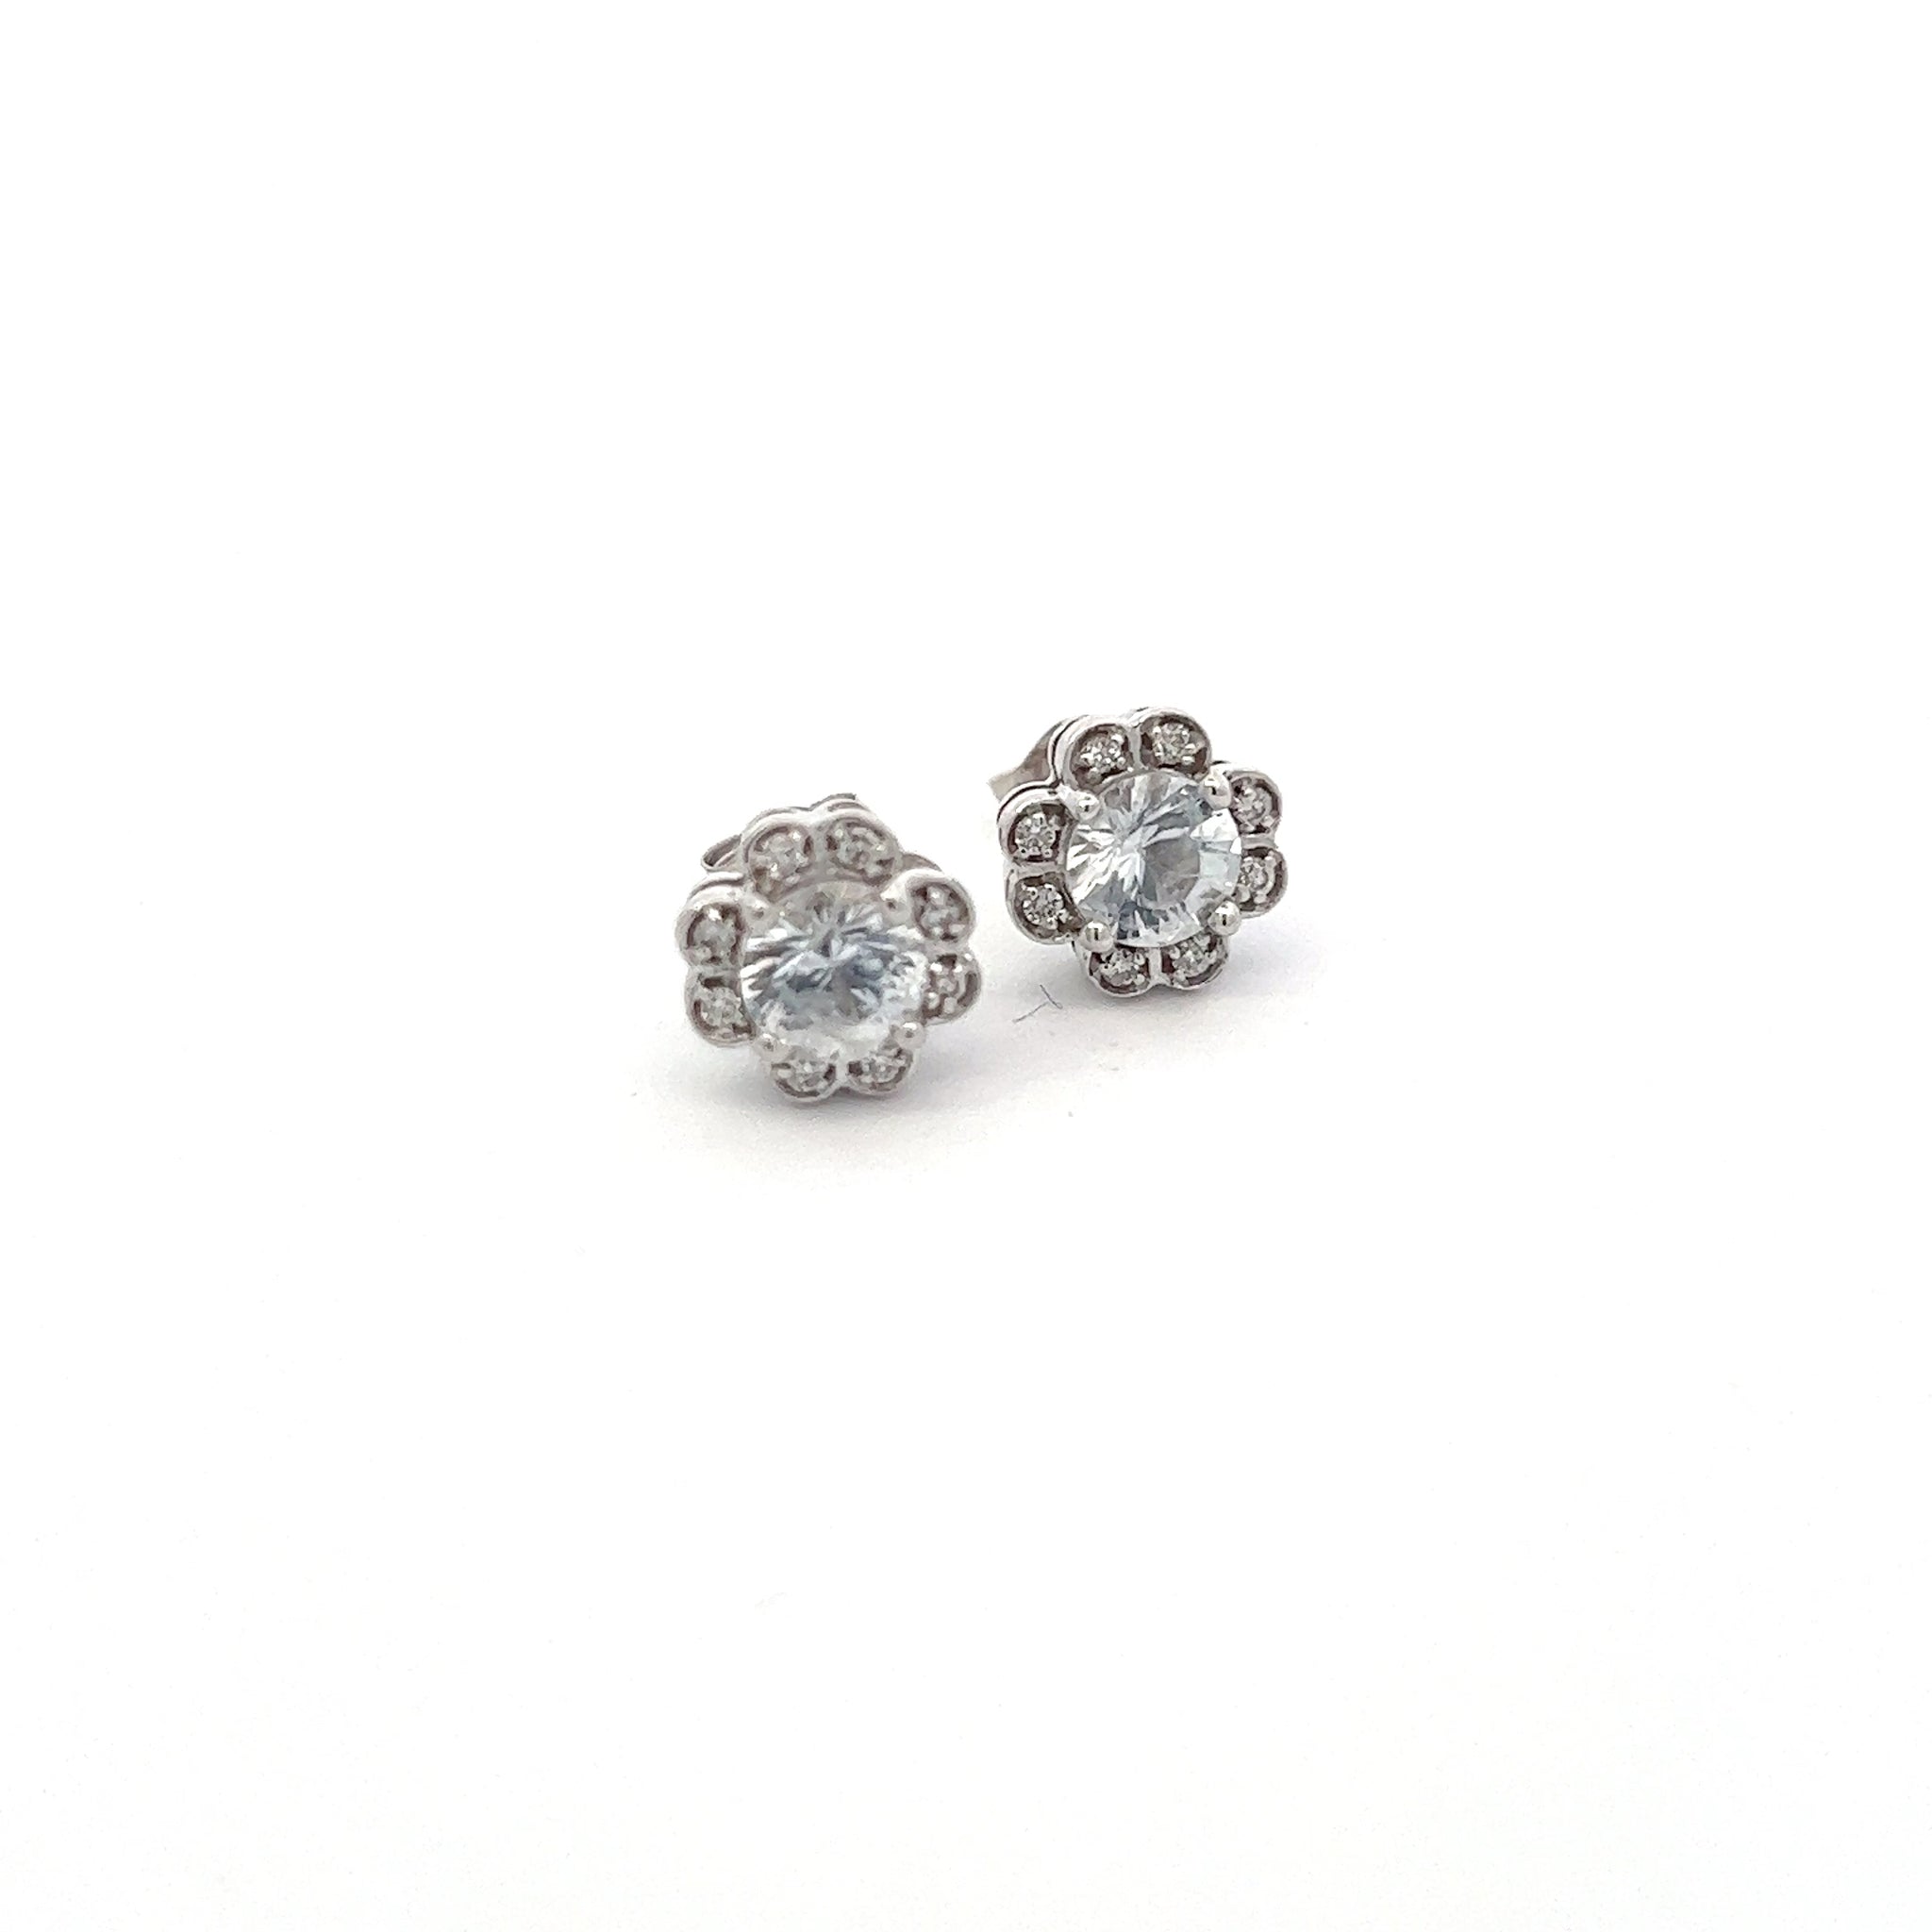 Natural Sapphire Diamond Stud Earrings 14k White Gold 1.62 TCW Certified $3,950 2111169